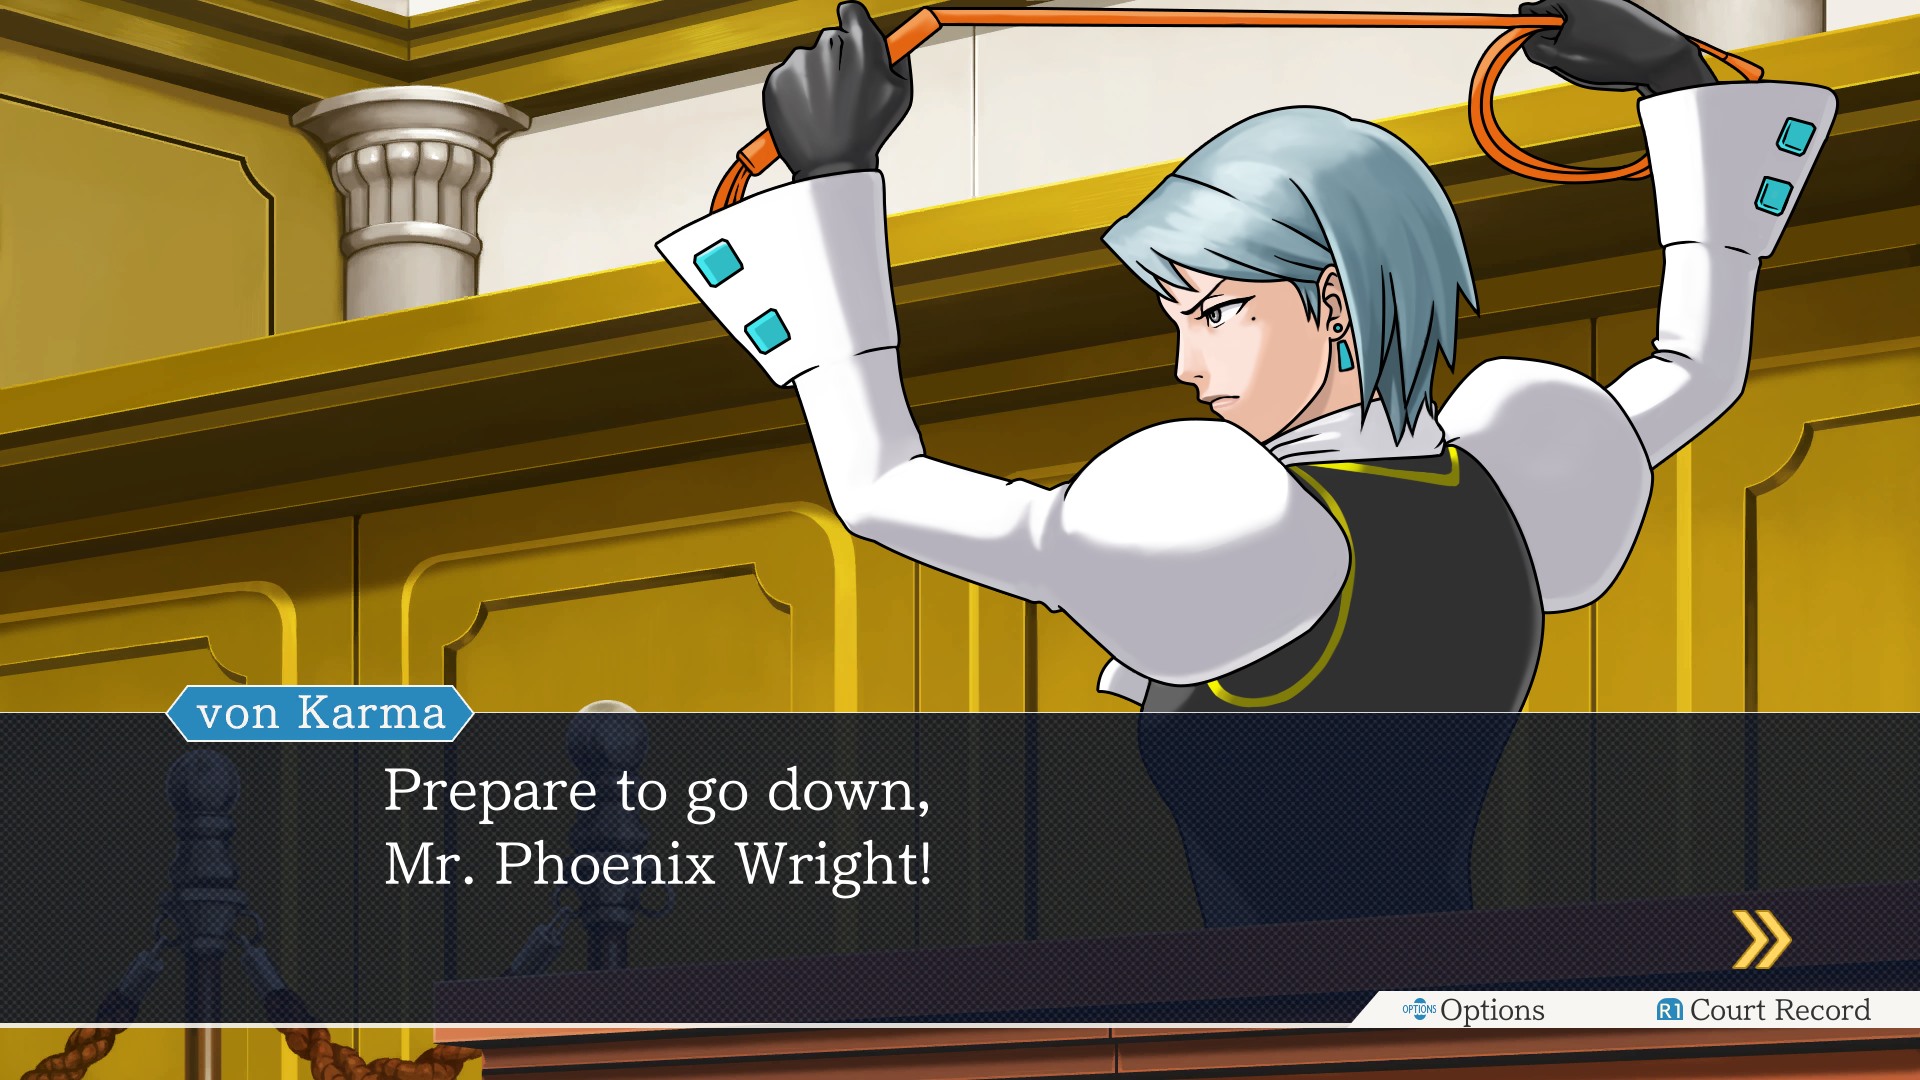 Análise: Phoenix Wright: Ace Attorney Trilogy